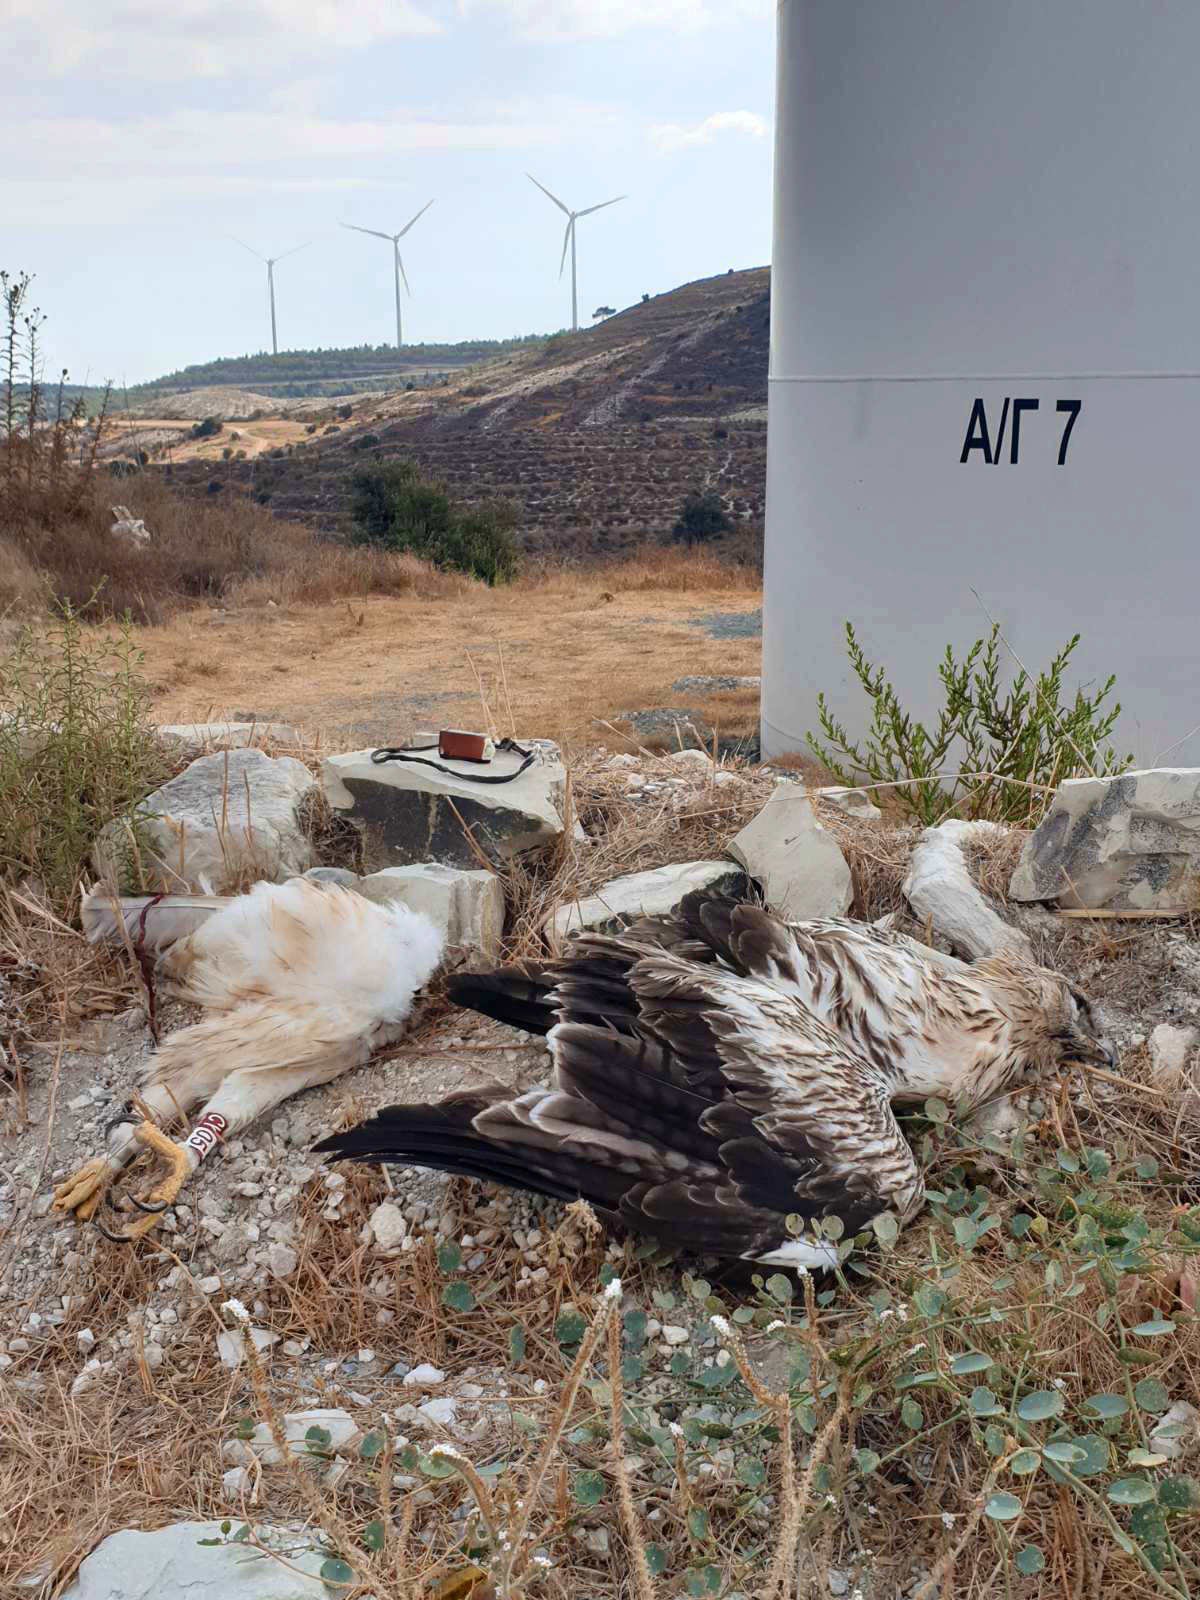 Bonellis Eagle collision WindPark Cyprus 1